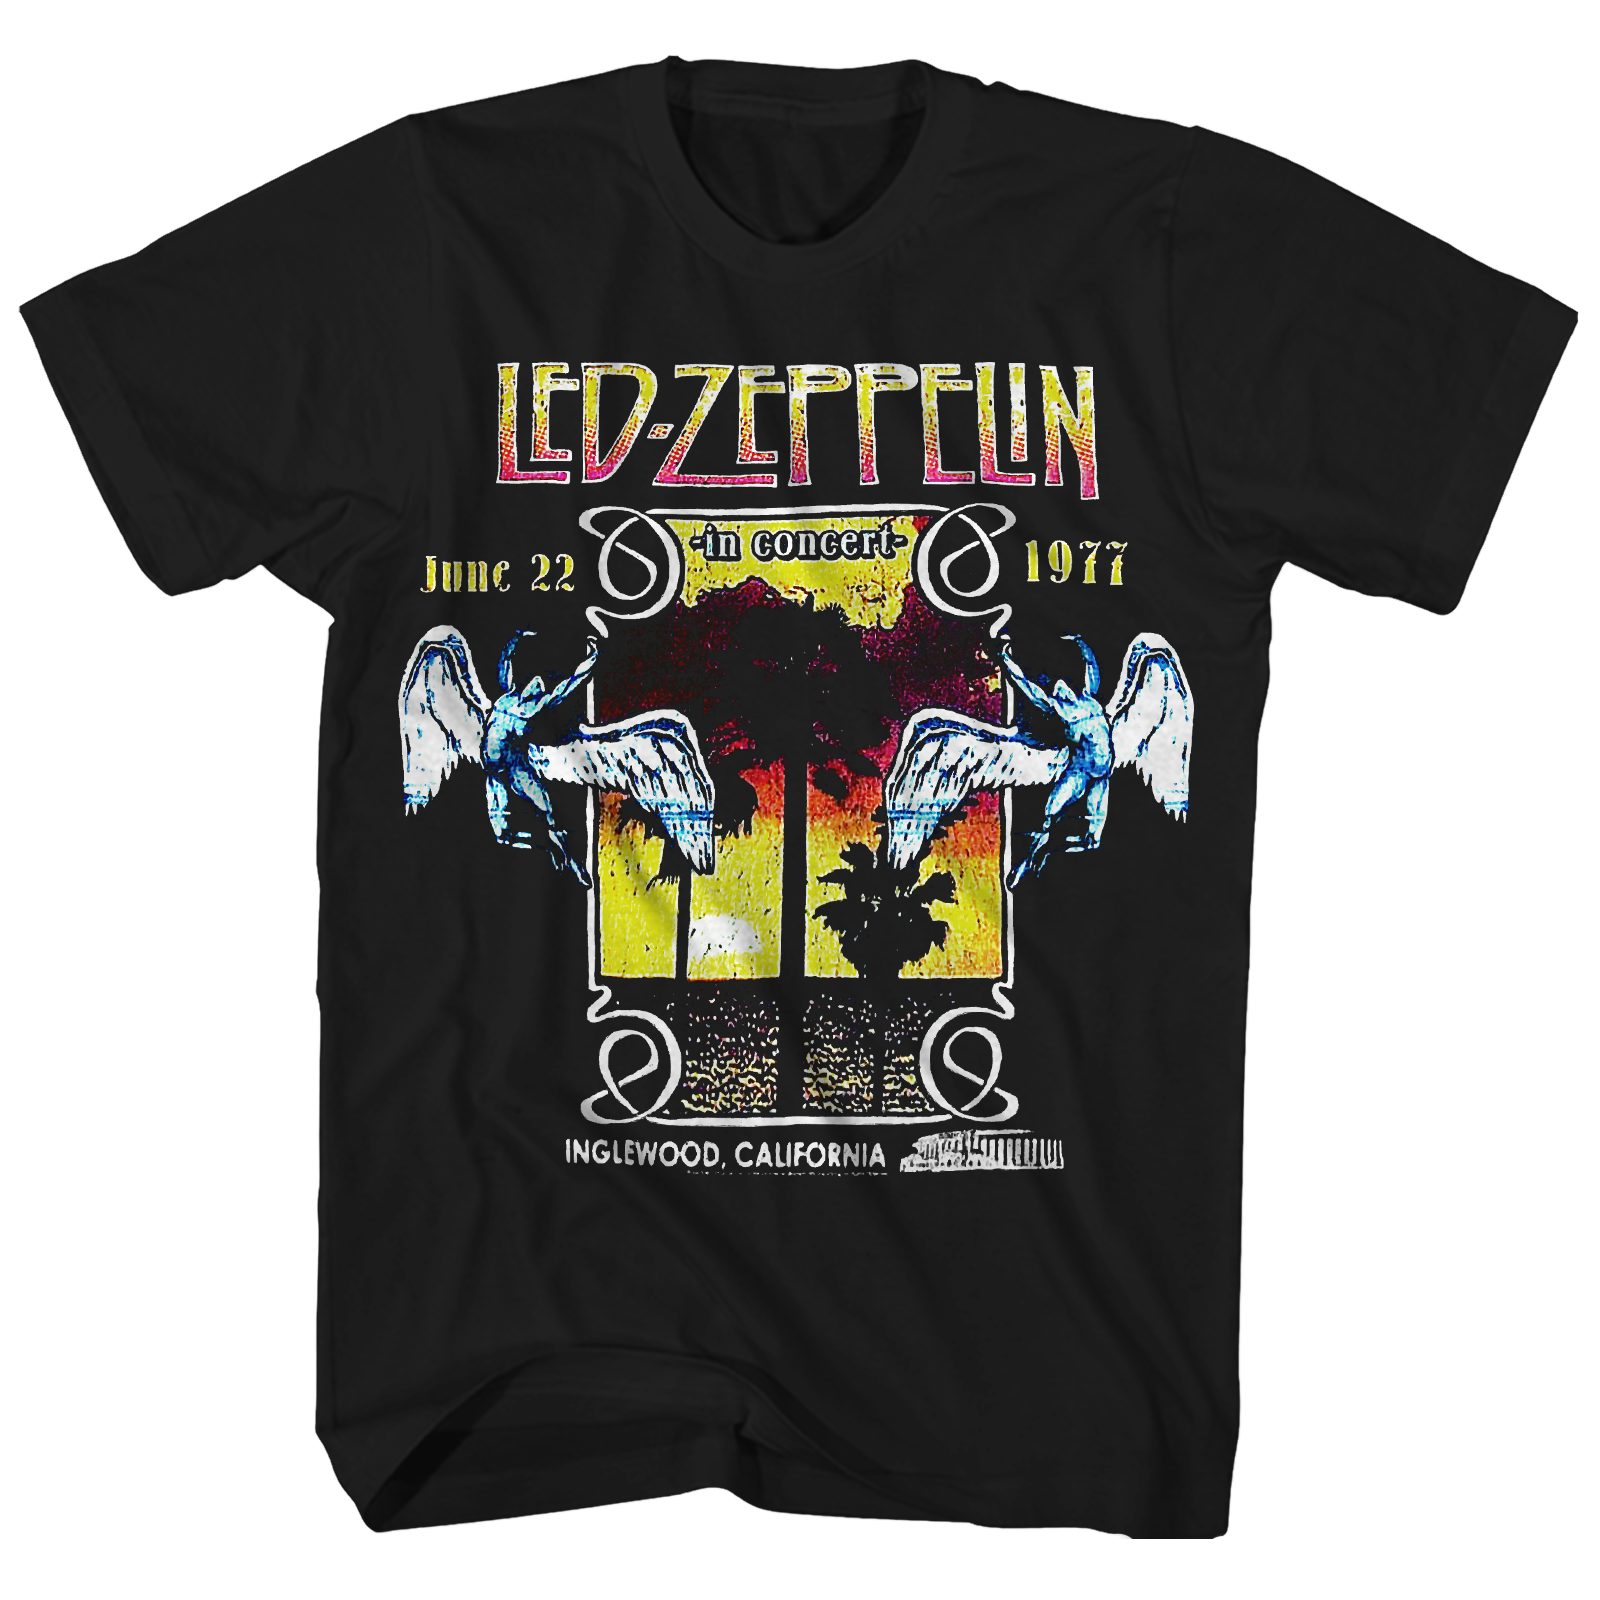 led zeplin tour shirts